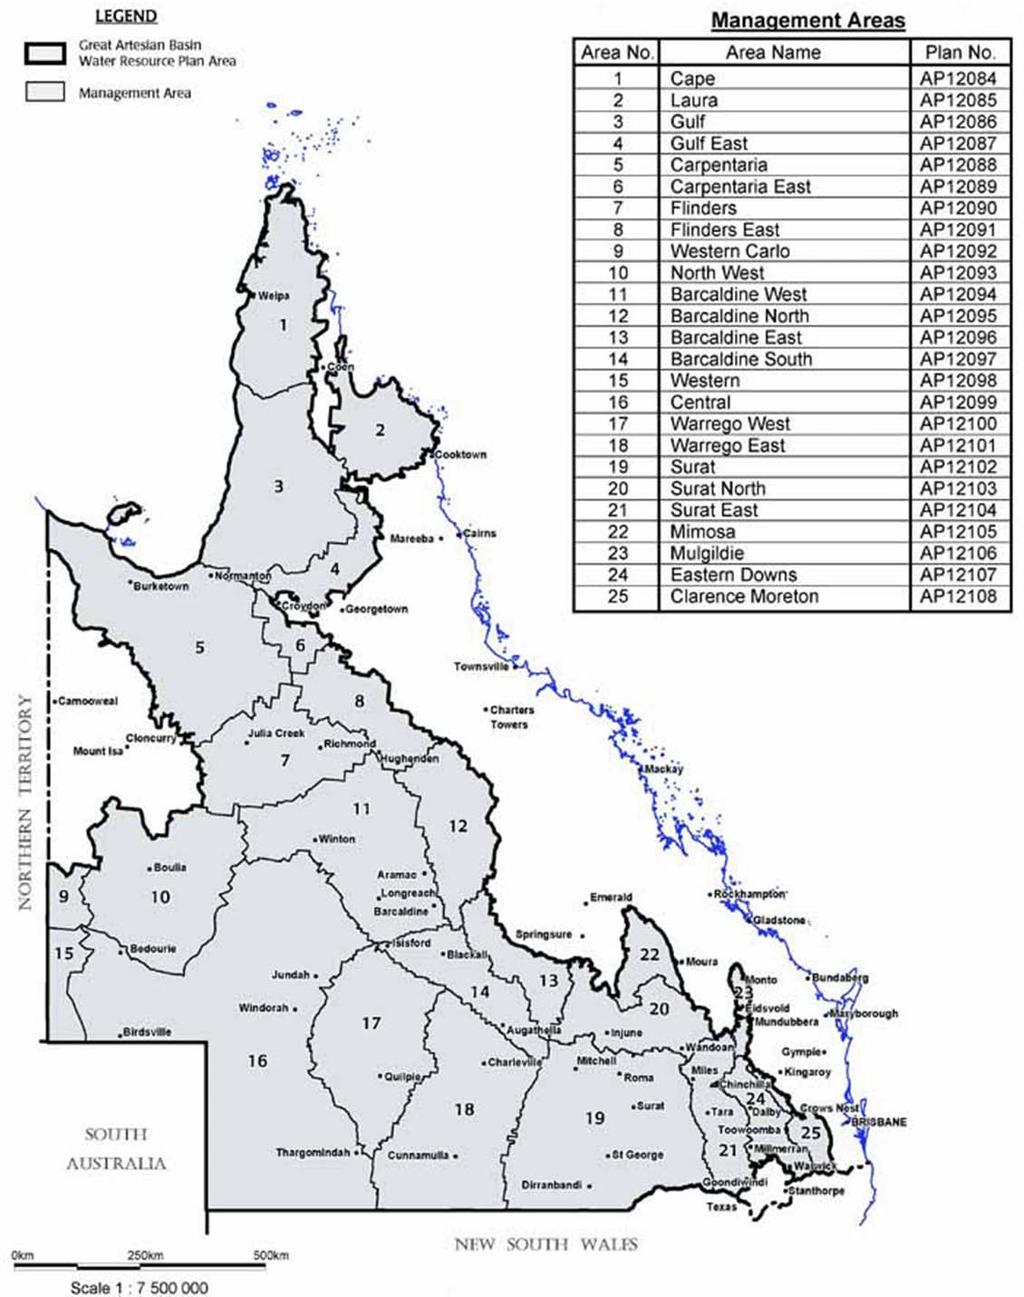 Figure 8: Great Artesian Basin Management Areas, Queensland Draft Regional Roadmap 2013 16